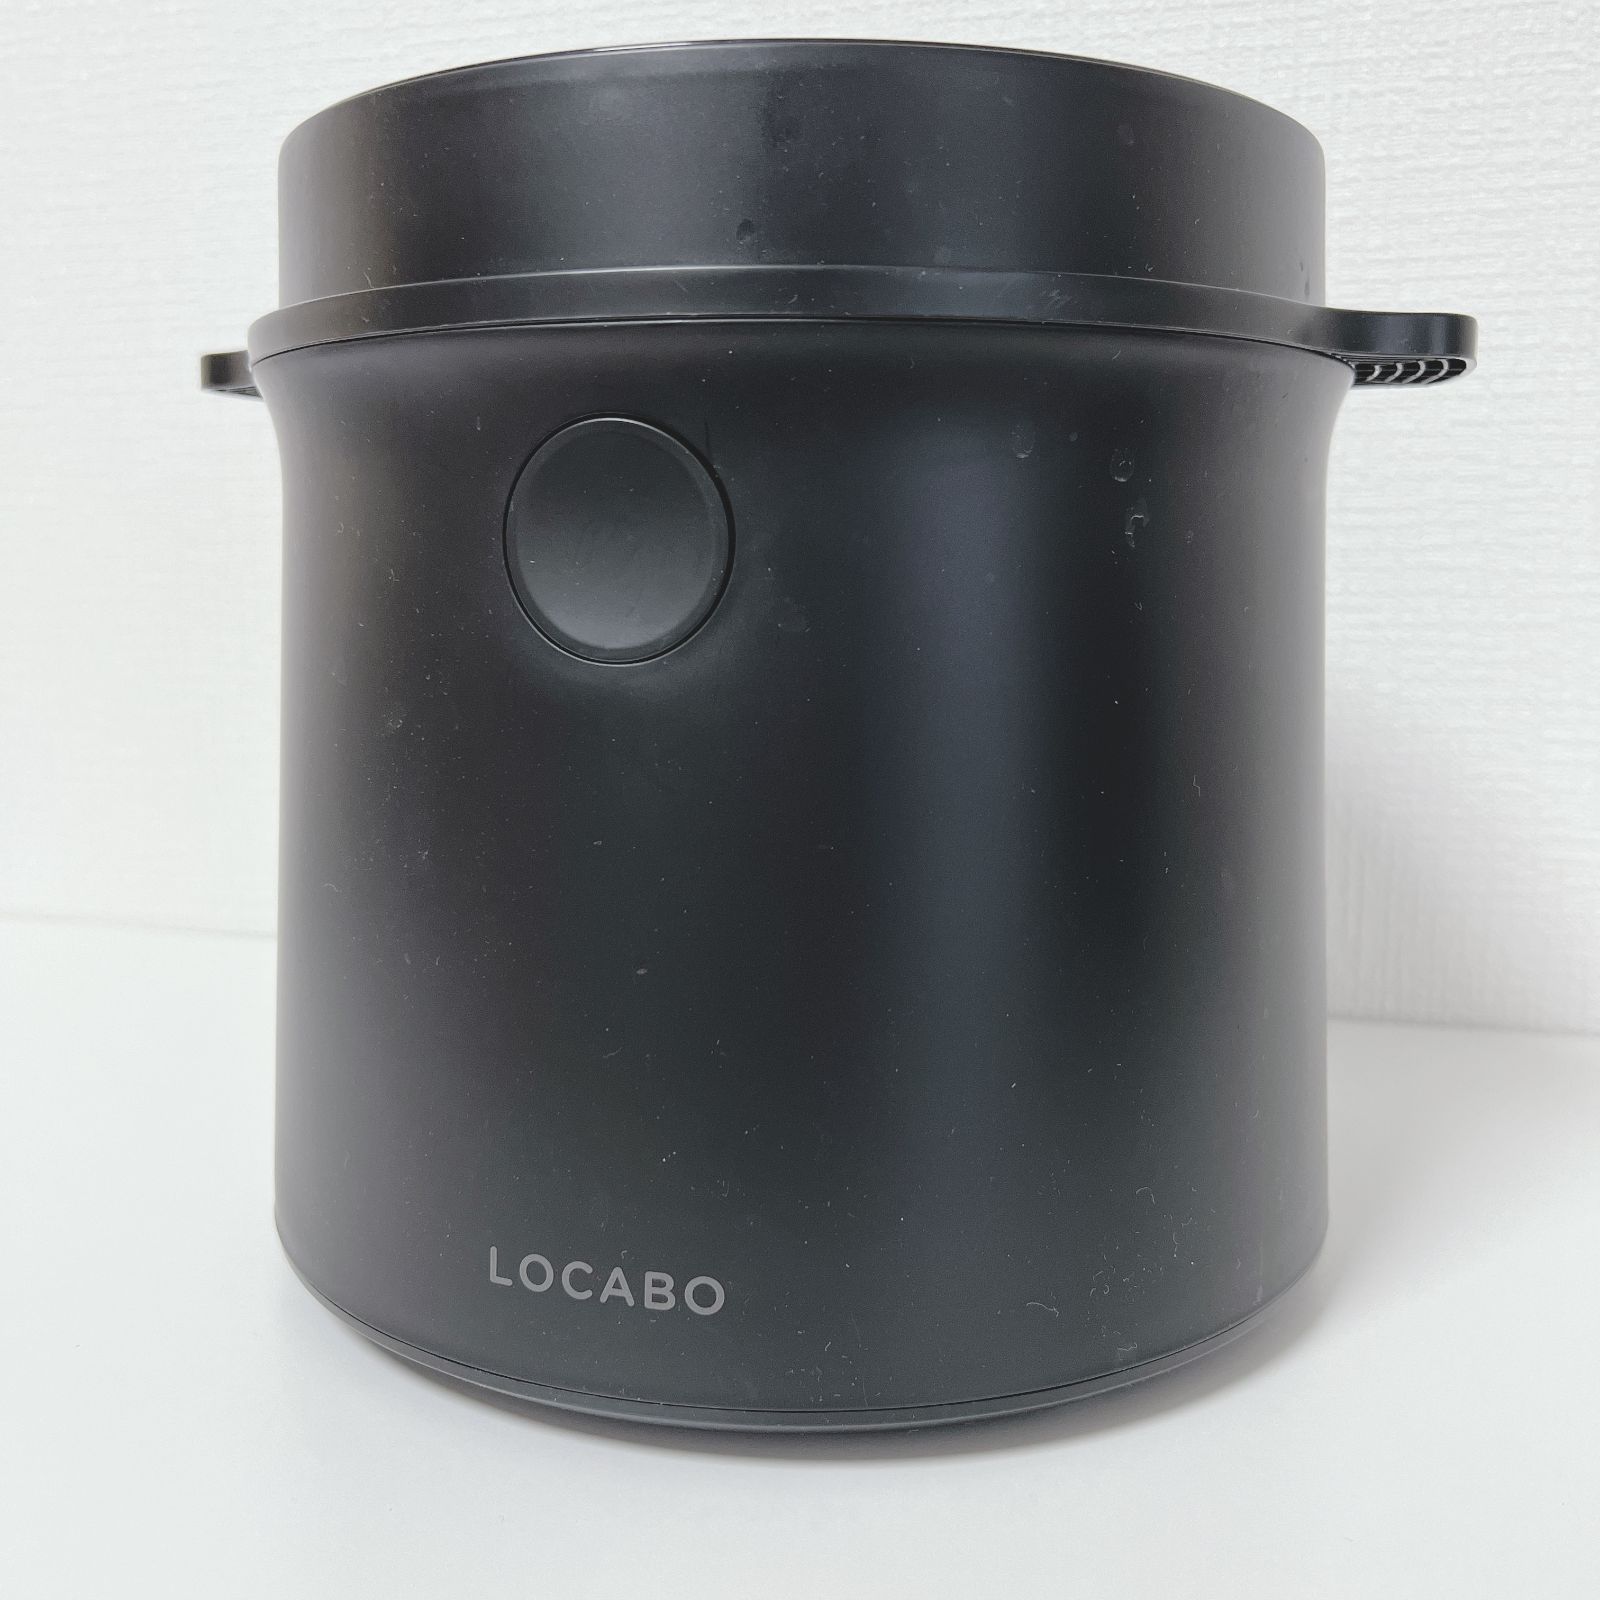 LOCABO 糖質カット炊飯器 JM-C20E-B 美品